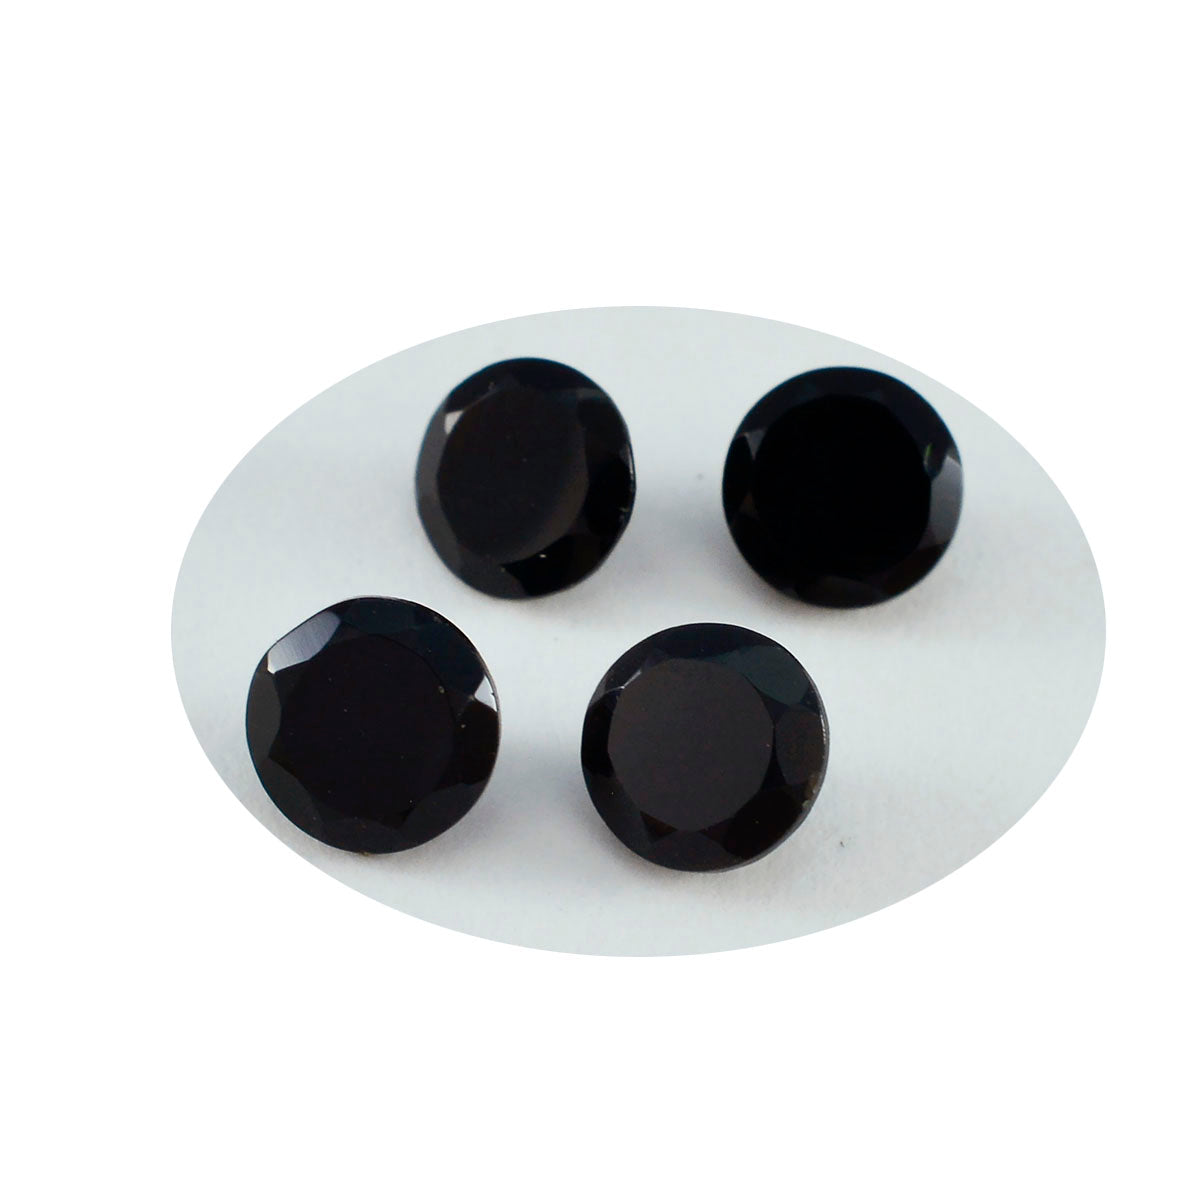 Riyogems 1PC Real Black Onyx Faceted 8x8 mm Round Shape good-looking Quality Gemstone